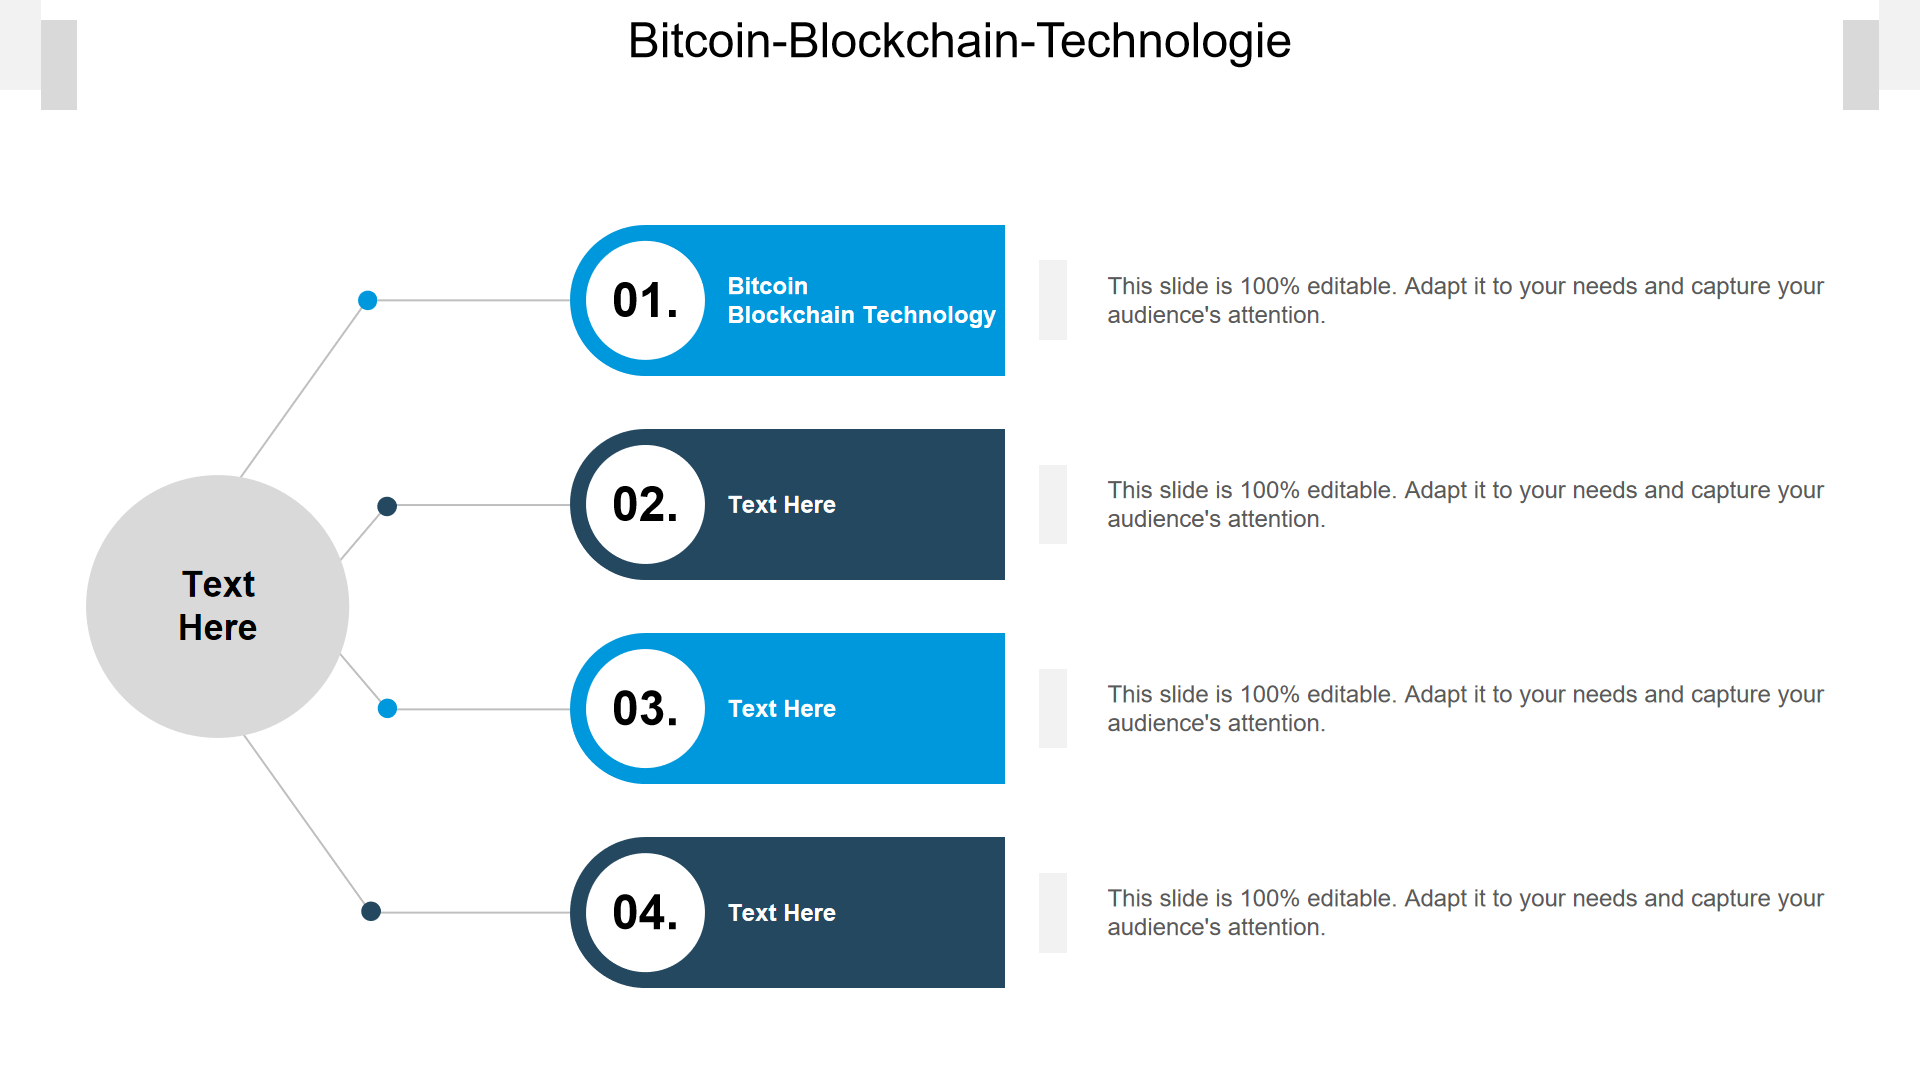 Bitcoin-Blockchain-Technologie